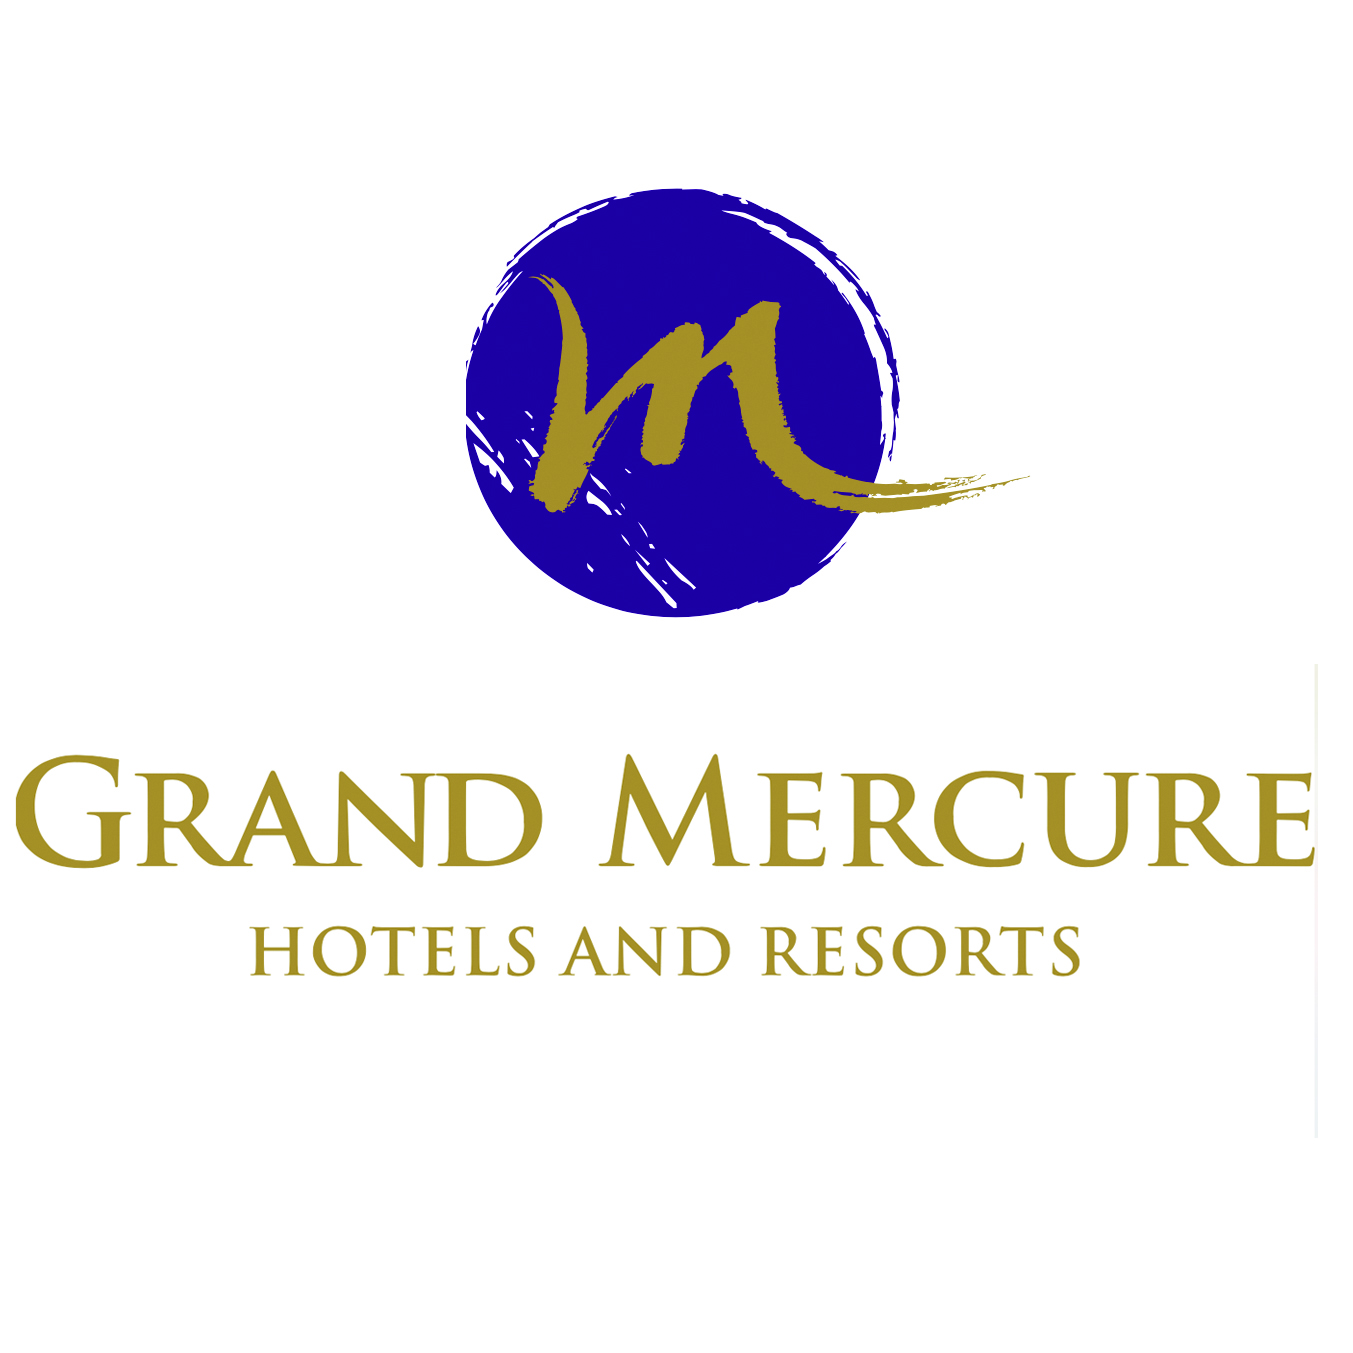 GRAND MERCURE HOTELS